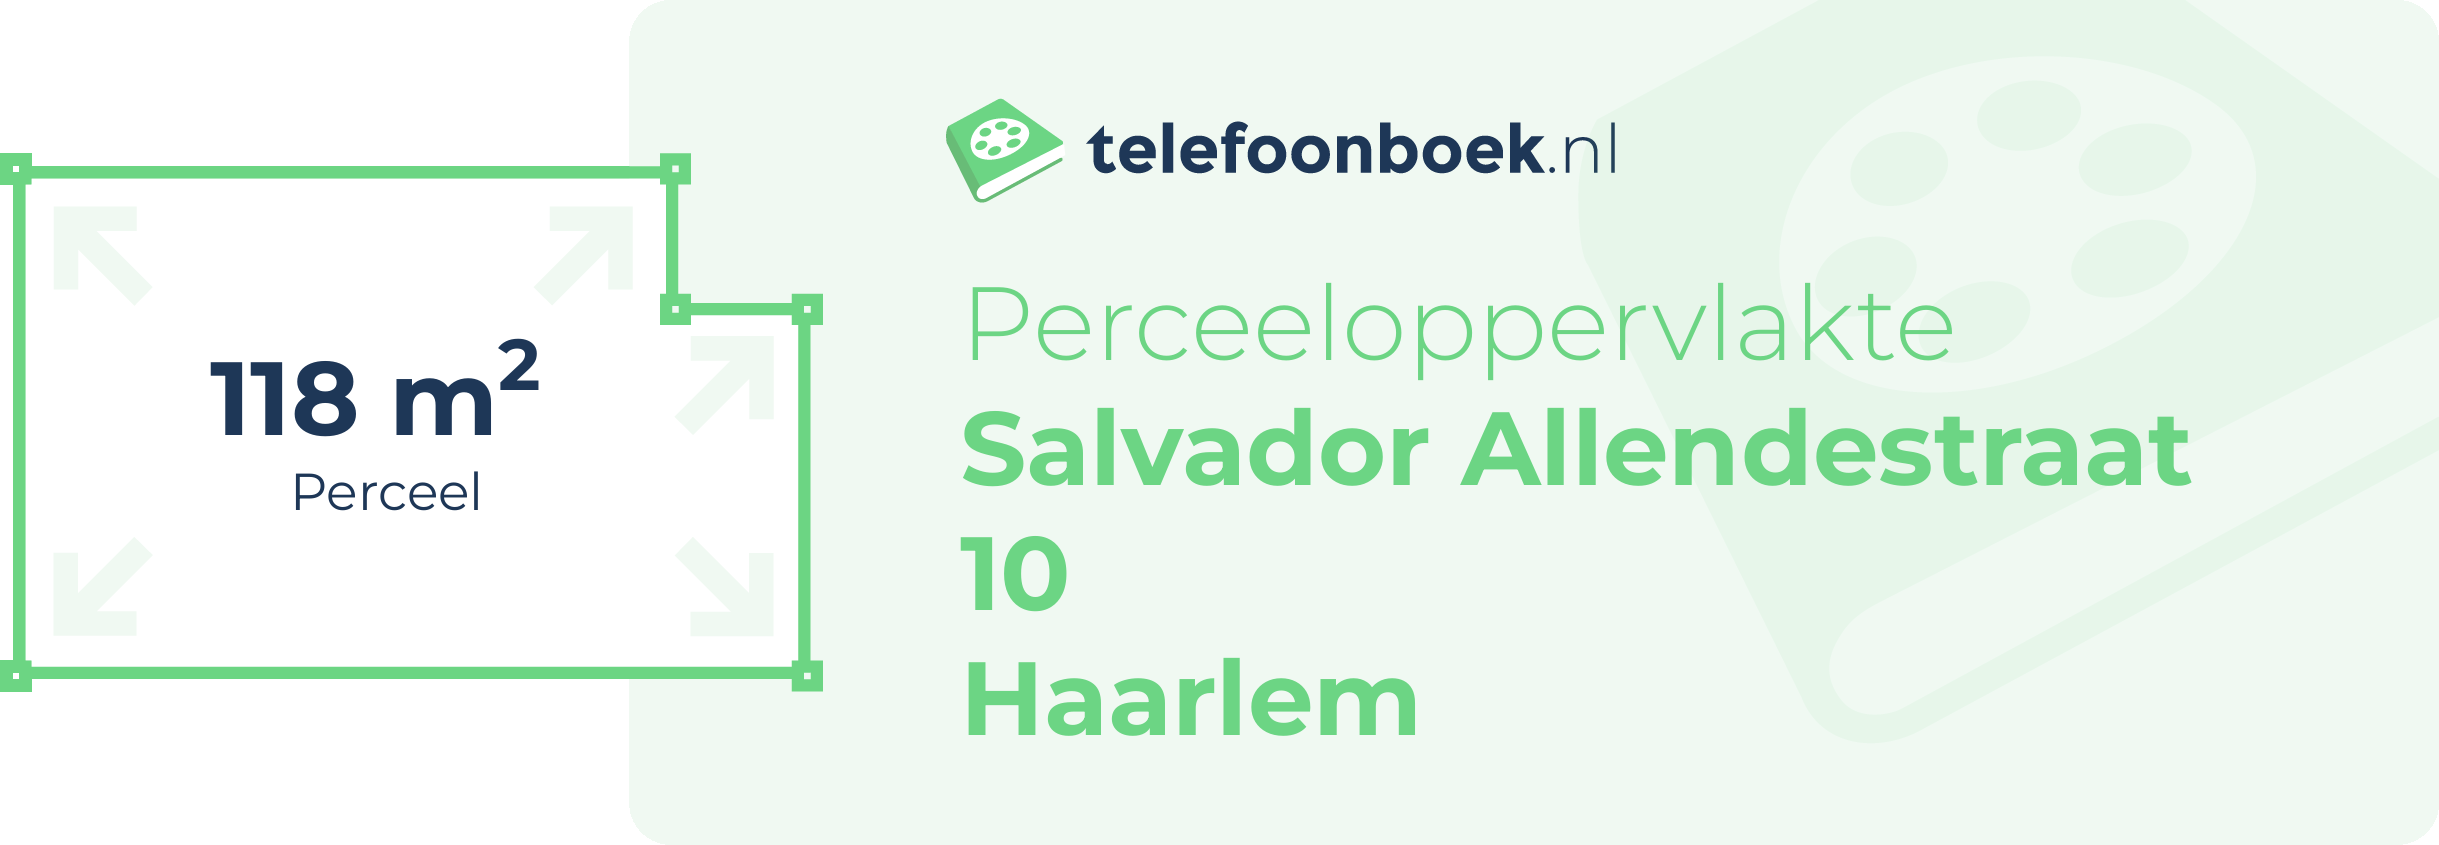 Perceeloppervlakte Salvador Allendestraat 10 Haarlem